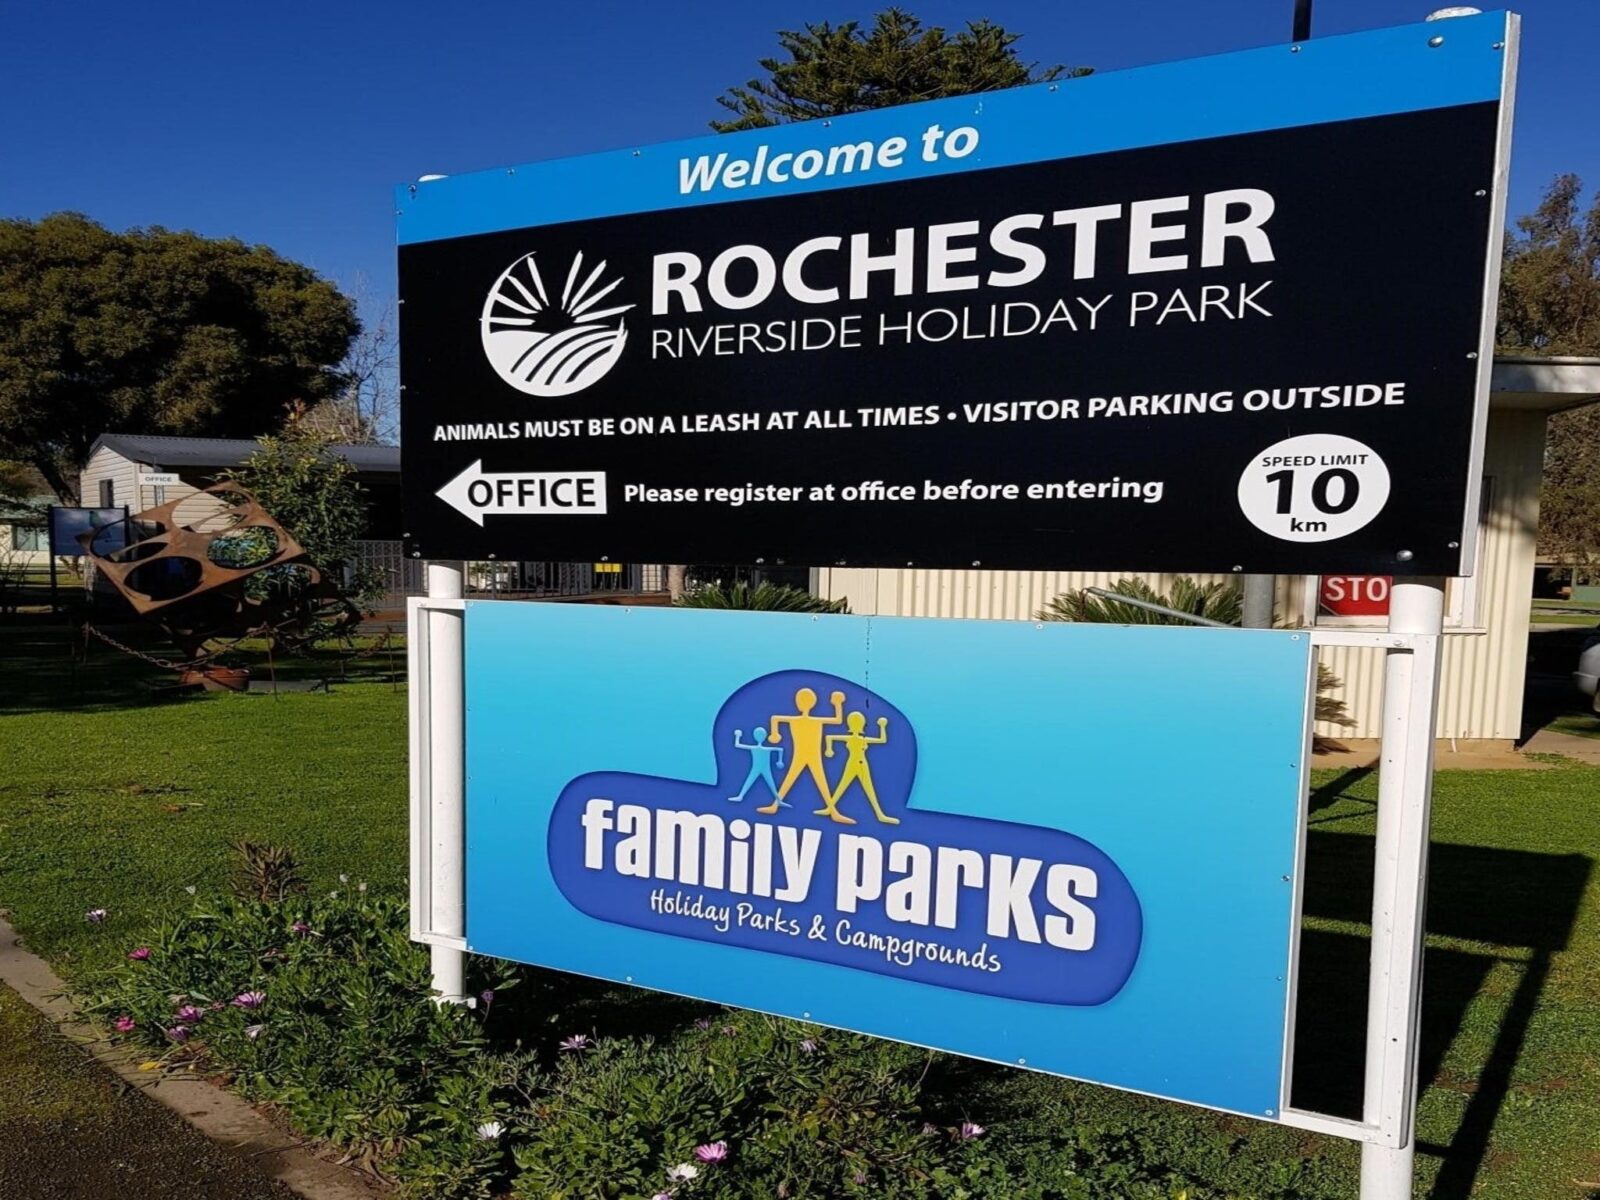 Rochester Riverside Holiday Park